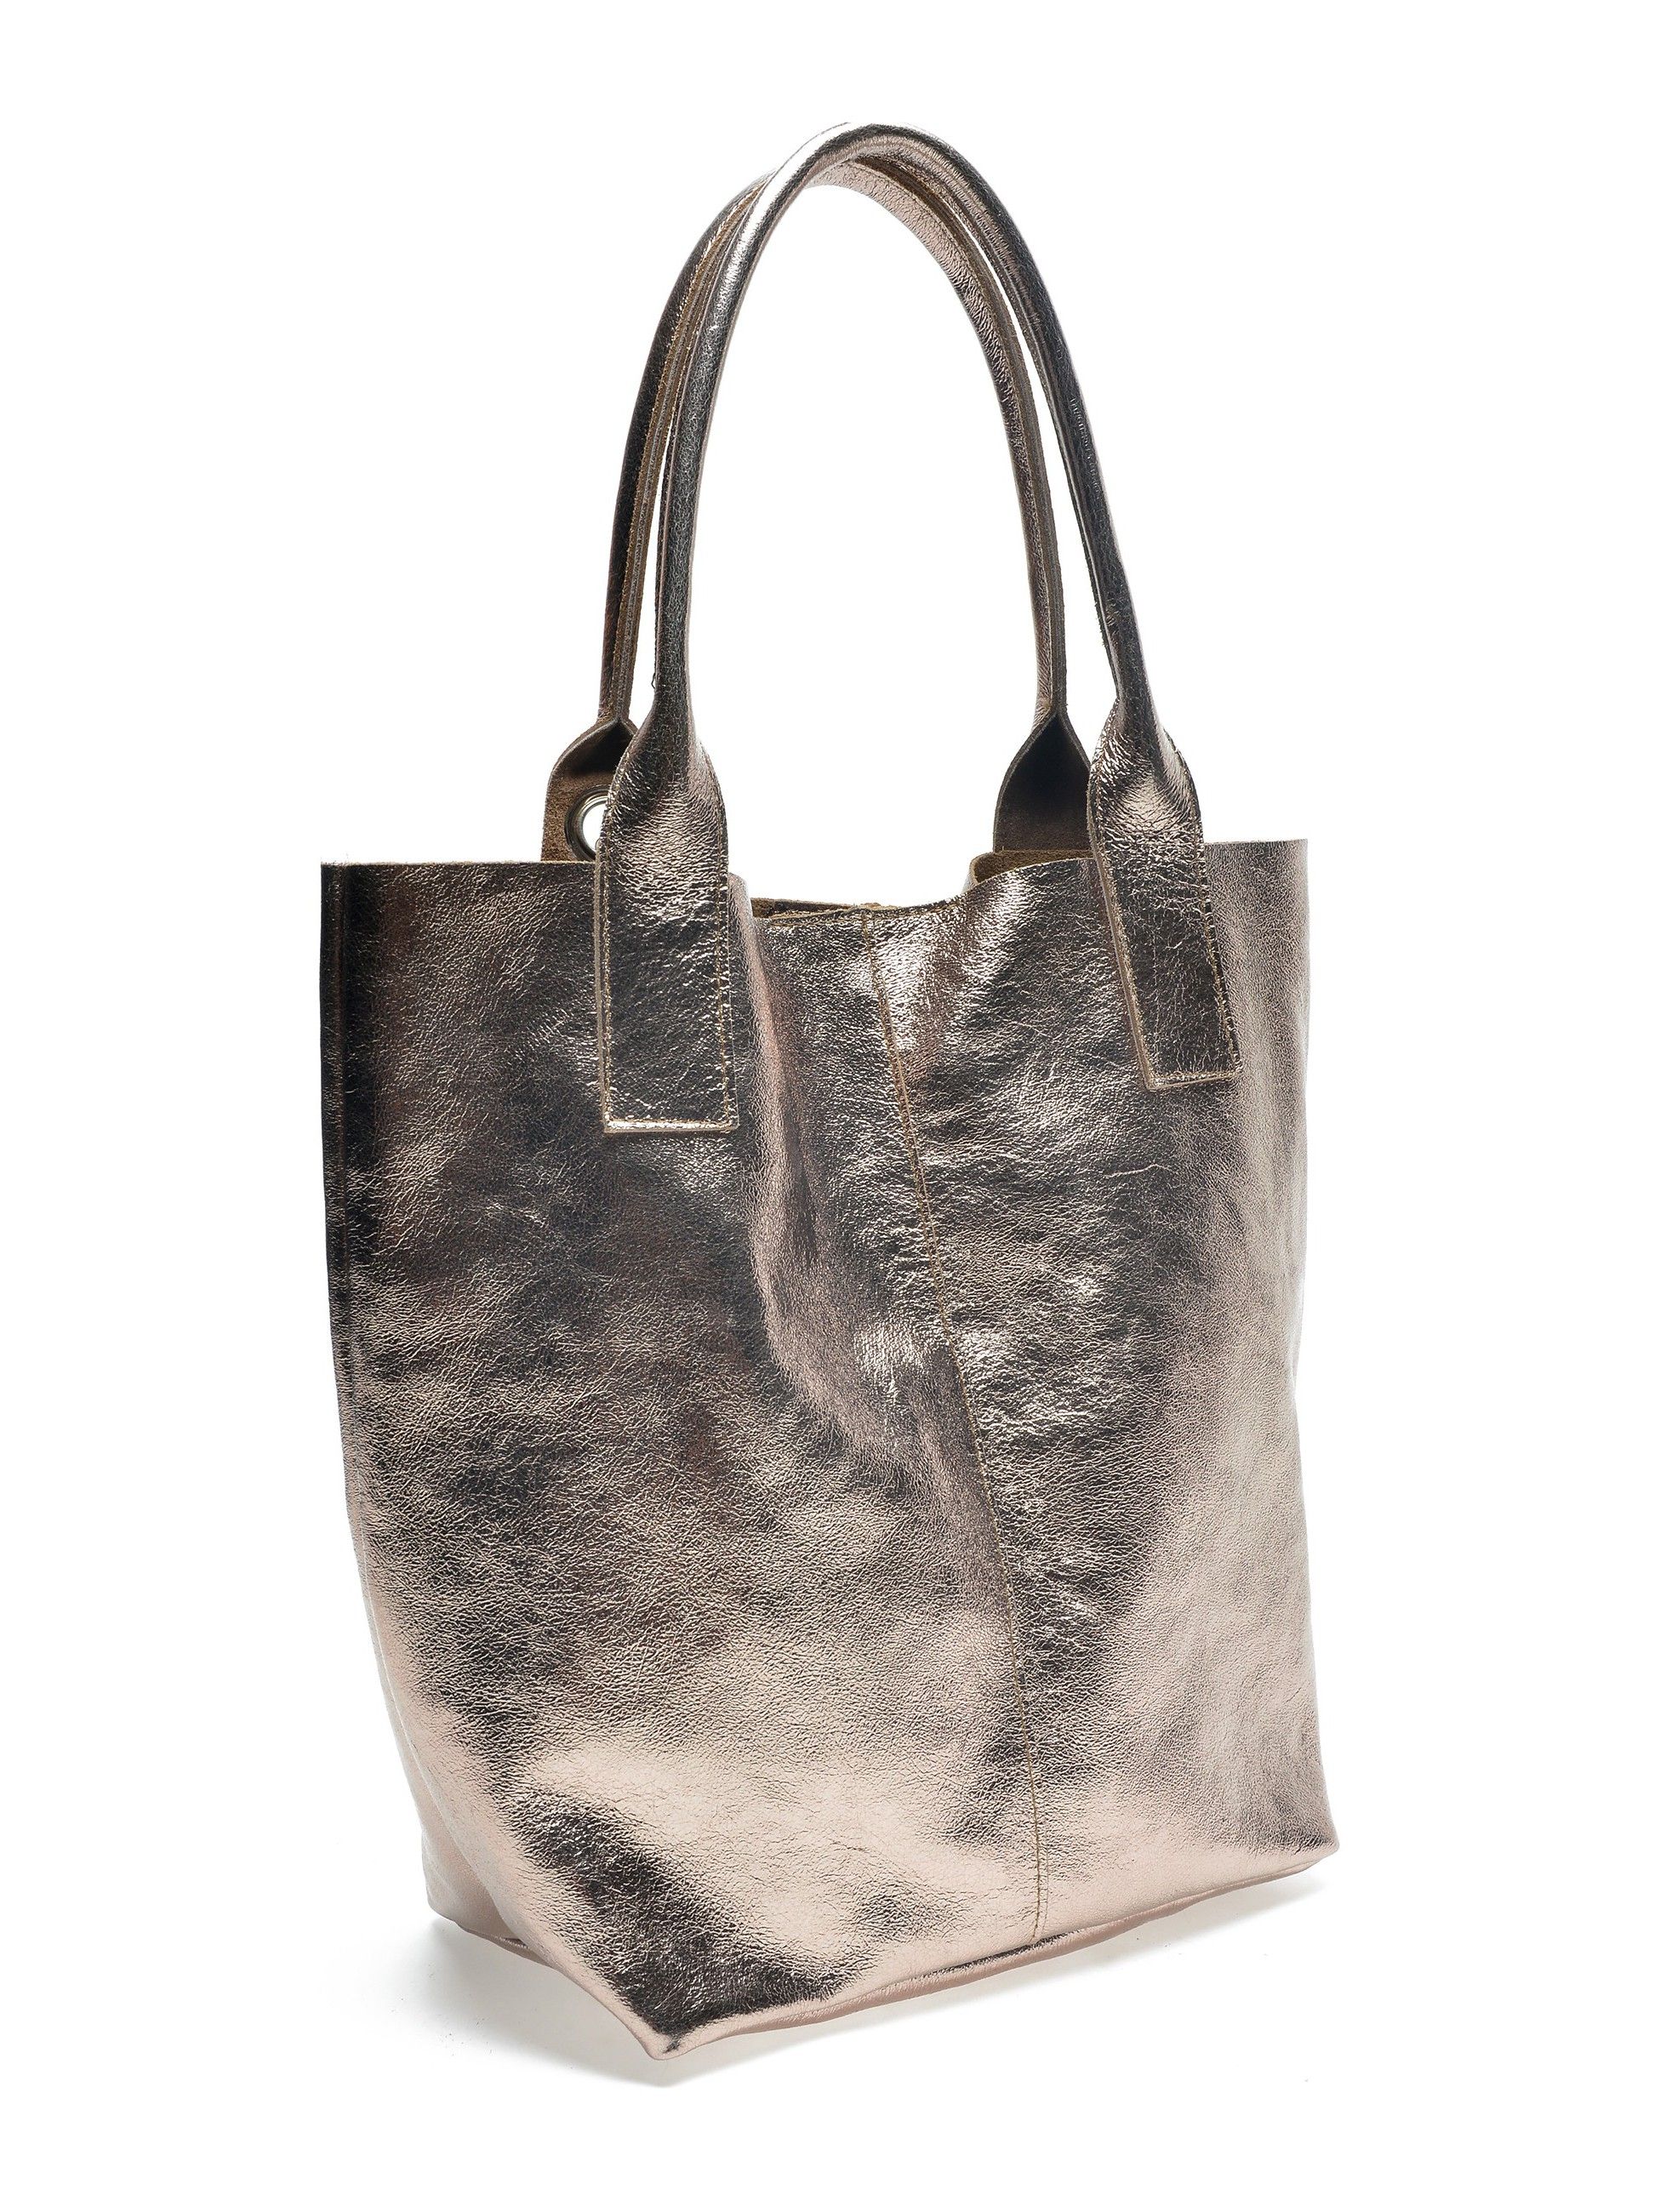 Tote Bag
100% cow leather
Magnetic clasp
Inner purse
Tassel detail 
Dimensions (L): 34x40x17 cm
Handle: 54 cm
Shoulder strap: /